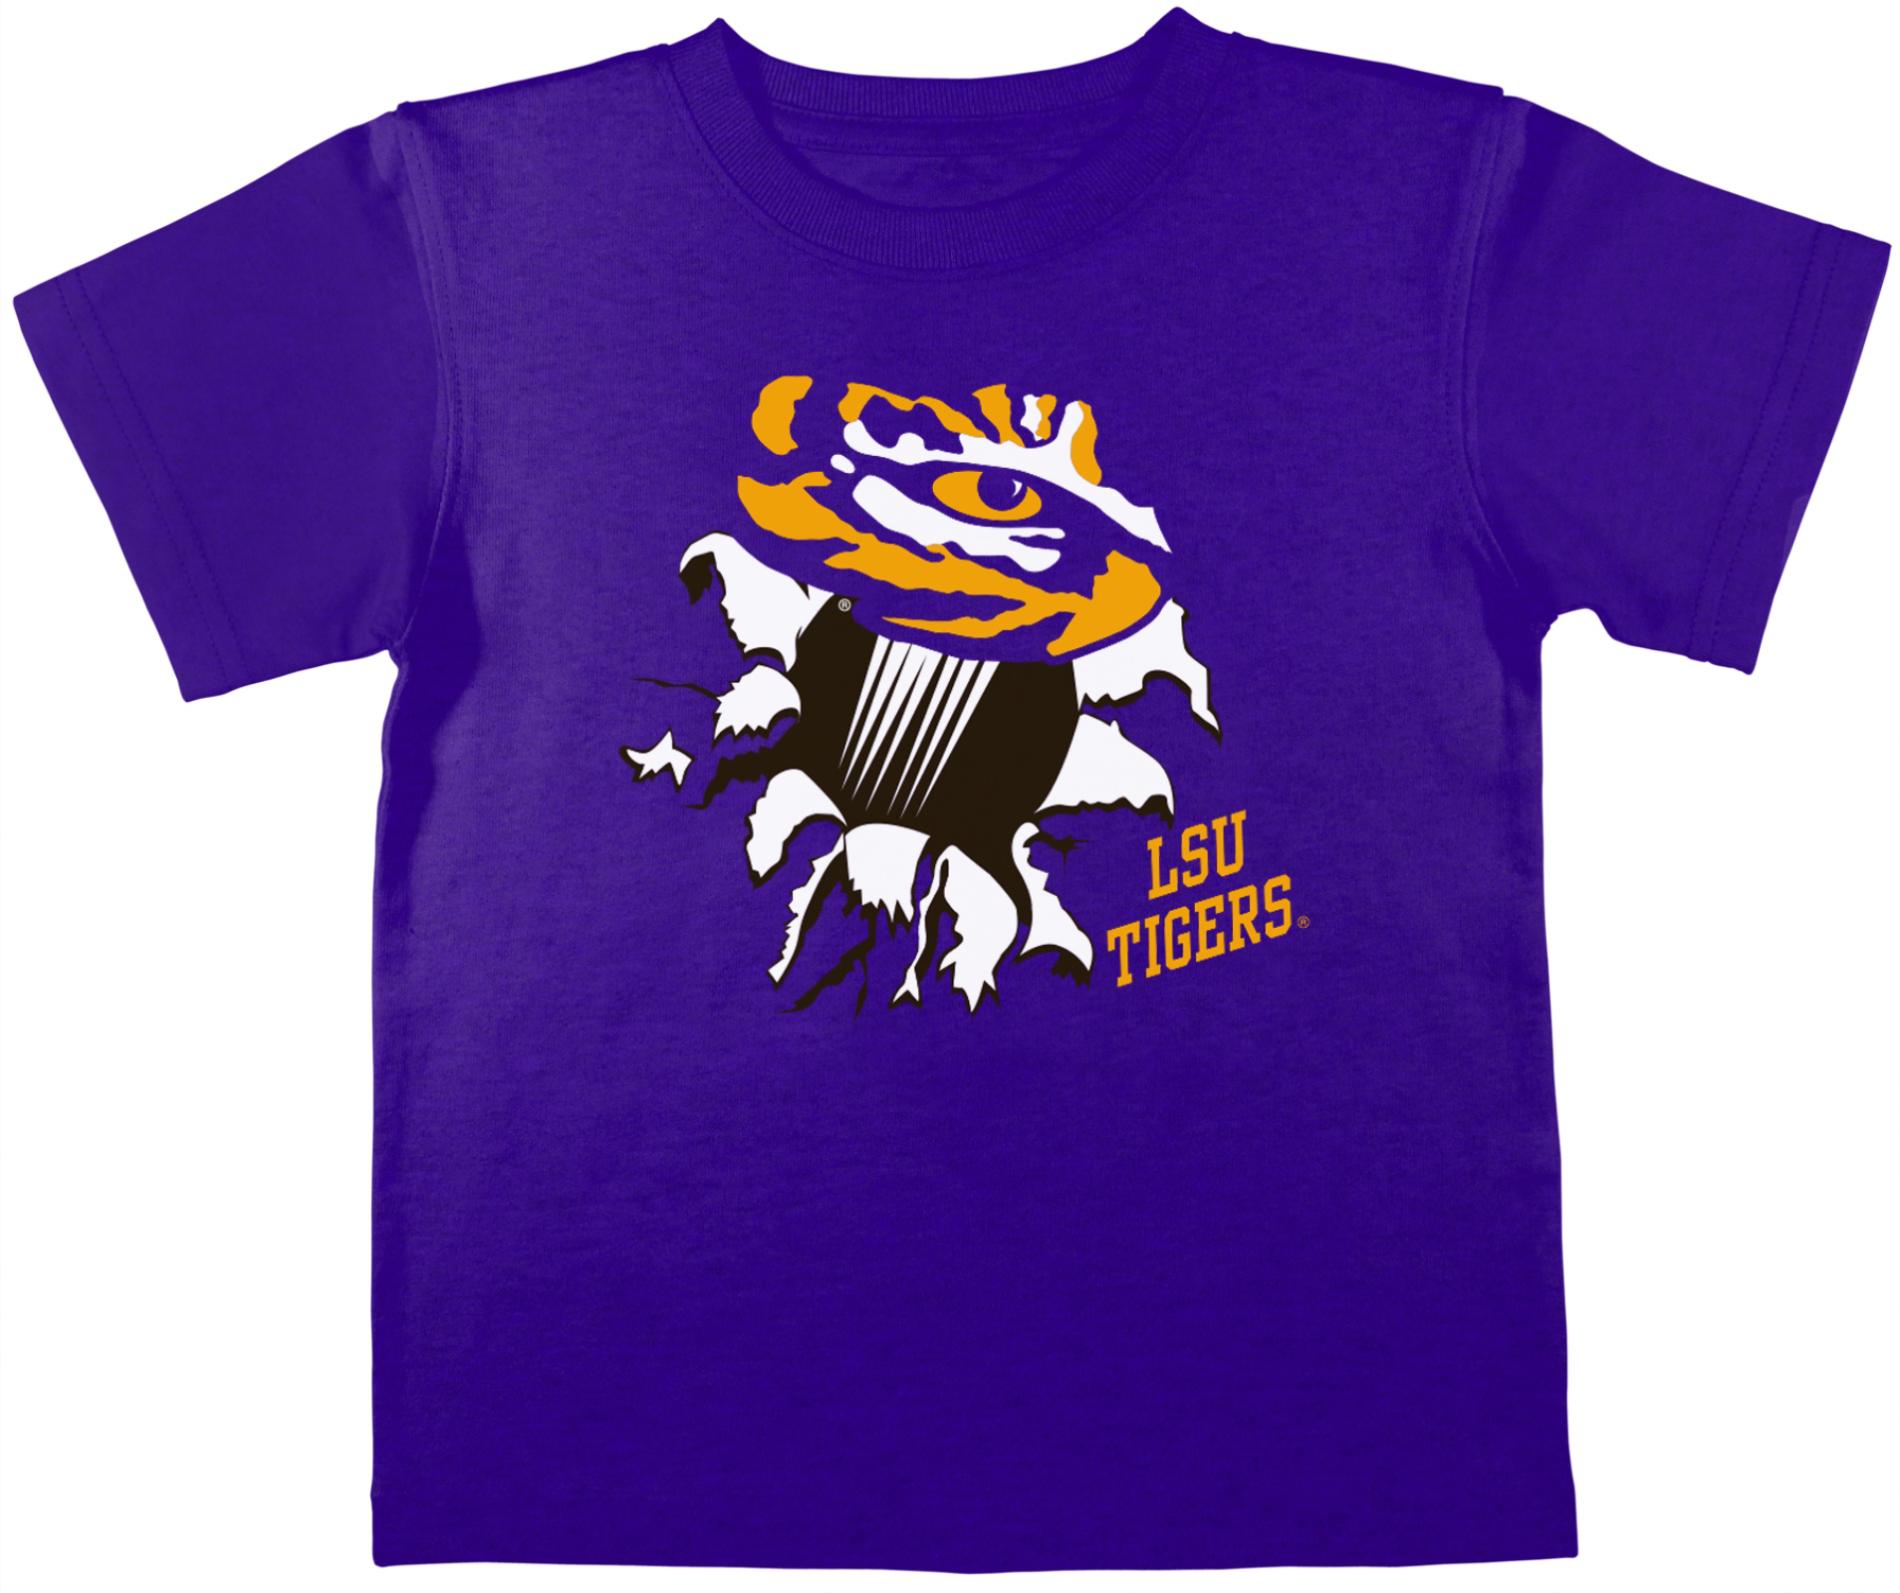 NCAA Toddler Boy's T-Shirt - Louisiana State University Tigers